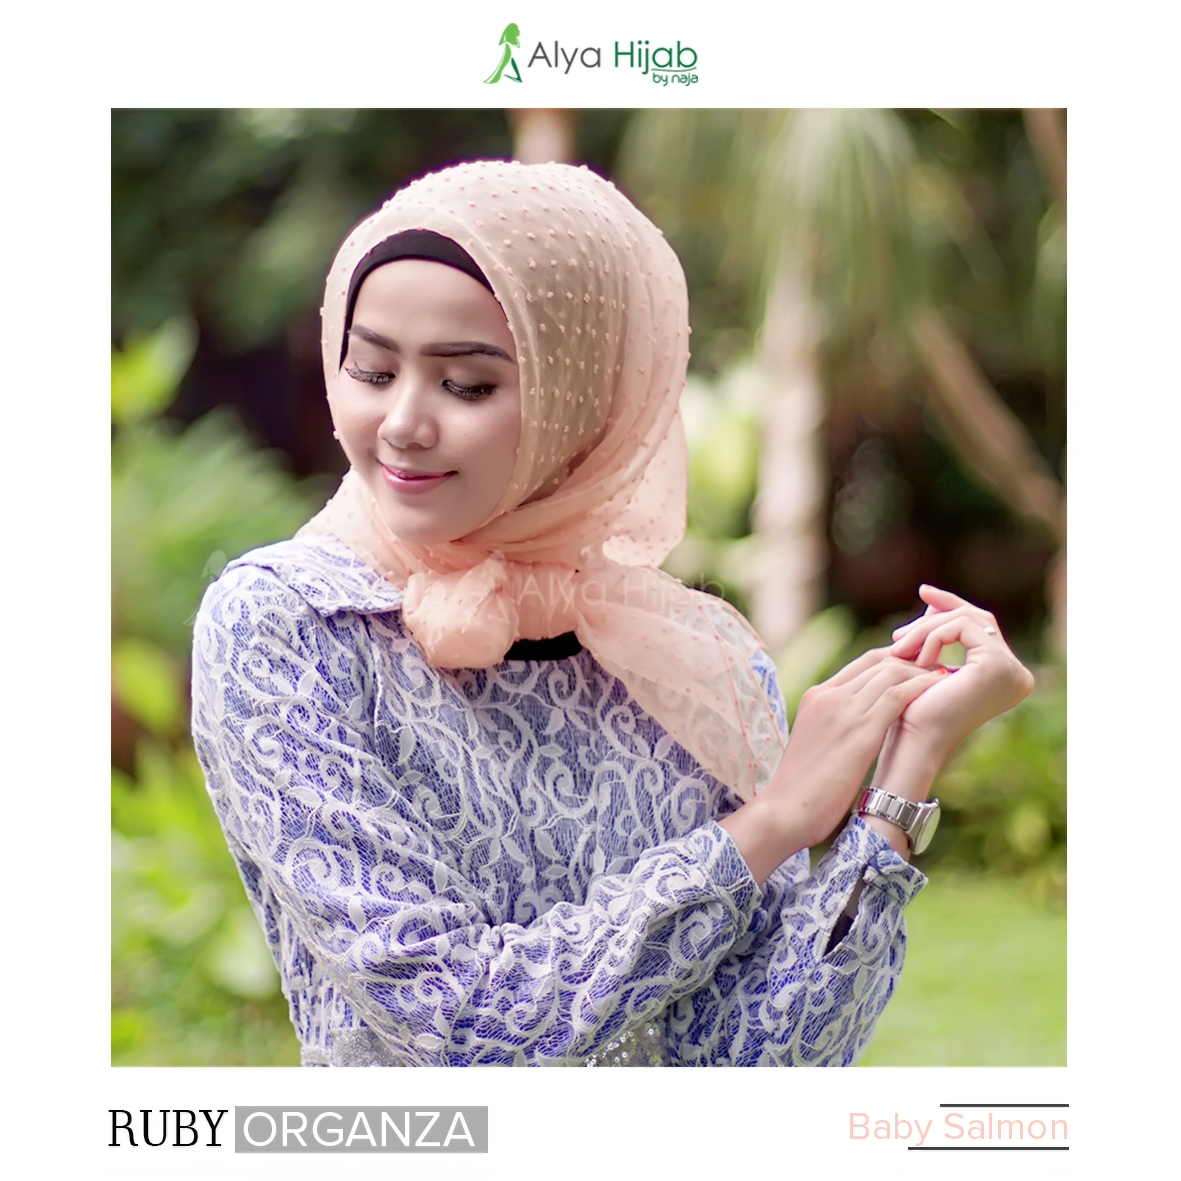 Alya Hijab by Naja Jual Hijab dan Produsen Hijab Berkualitas